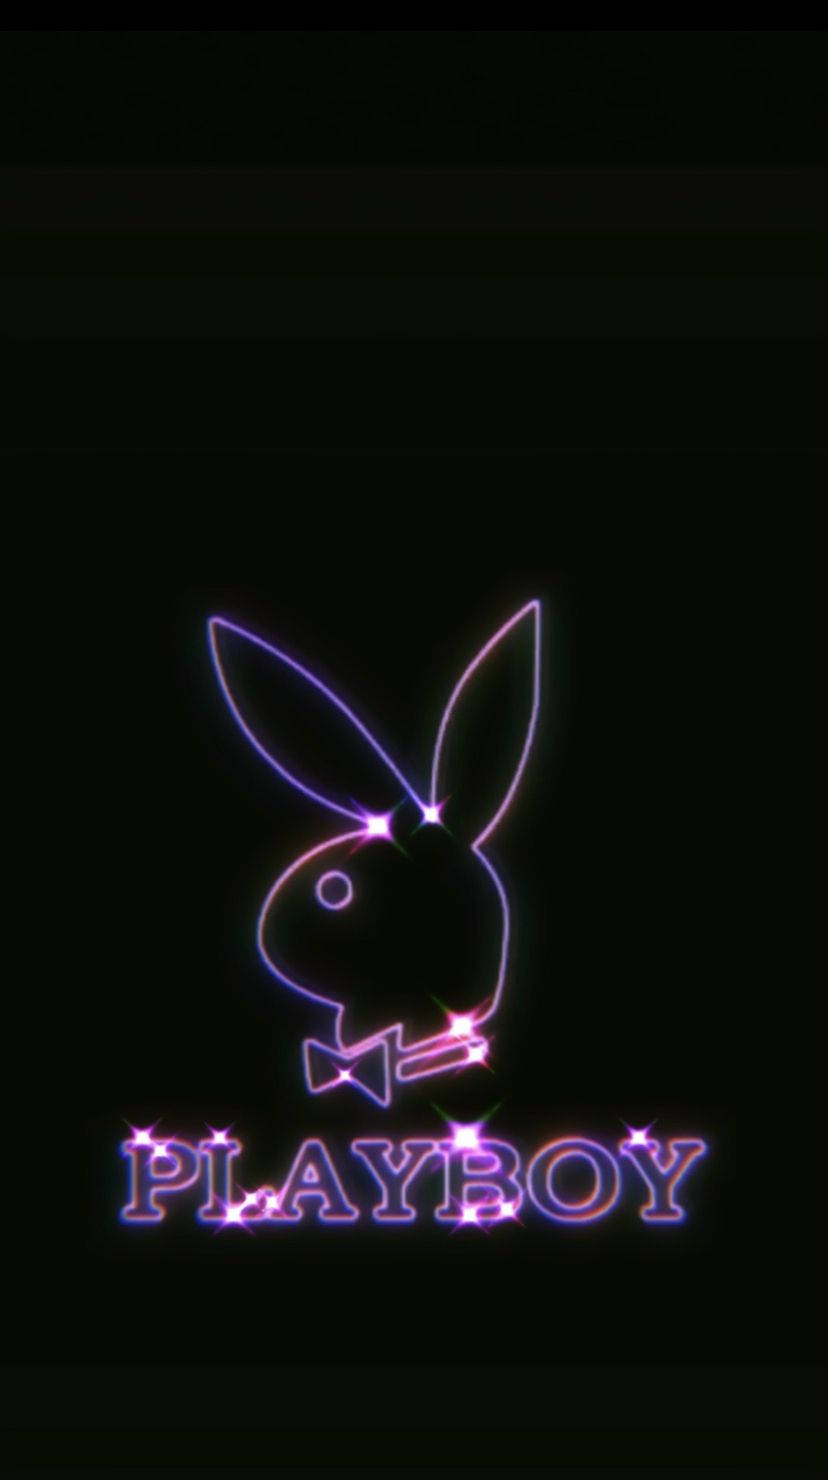 Retro Playboy Logo Wallpaper